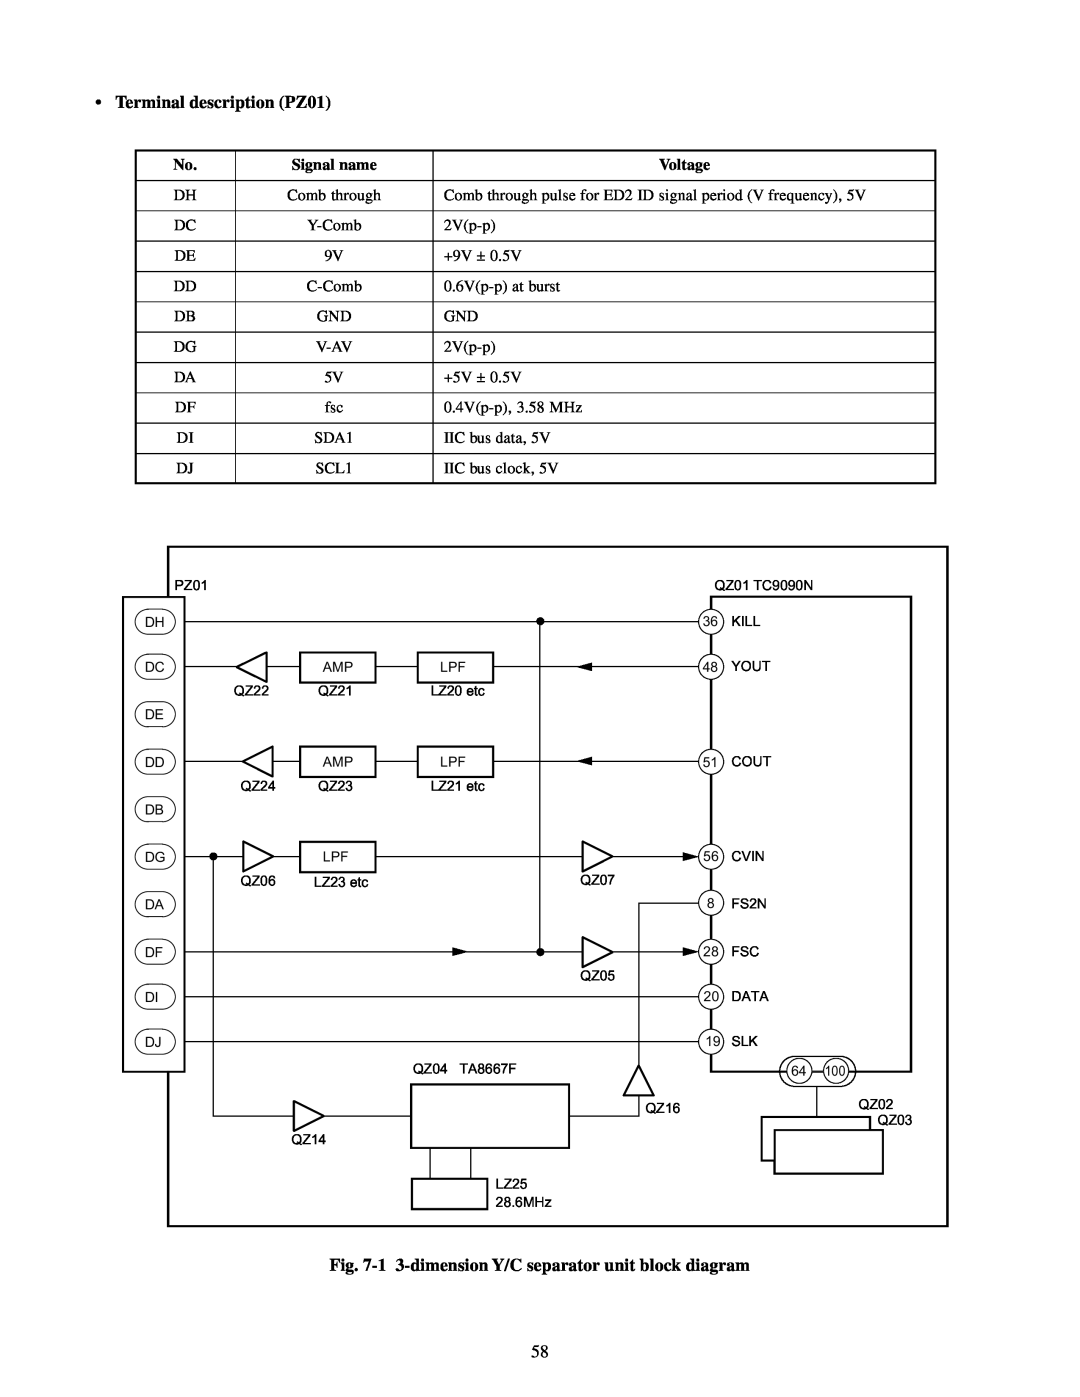 Toshiba TW40F80 Terminal description PZ01, 1 3-dimension Y/C separator unit block diagram, Signal name, Voltage, V-Av 